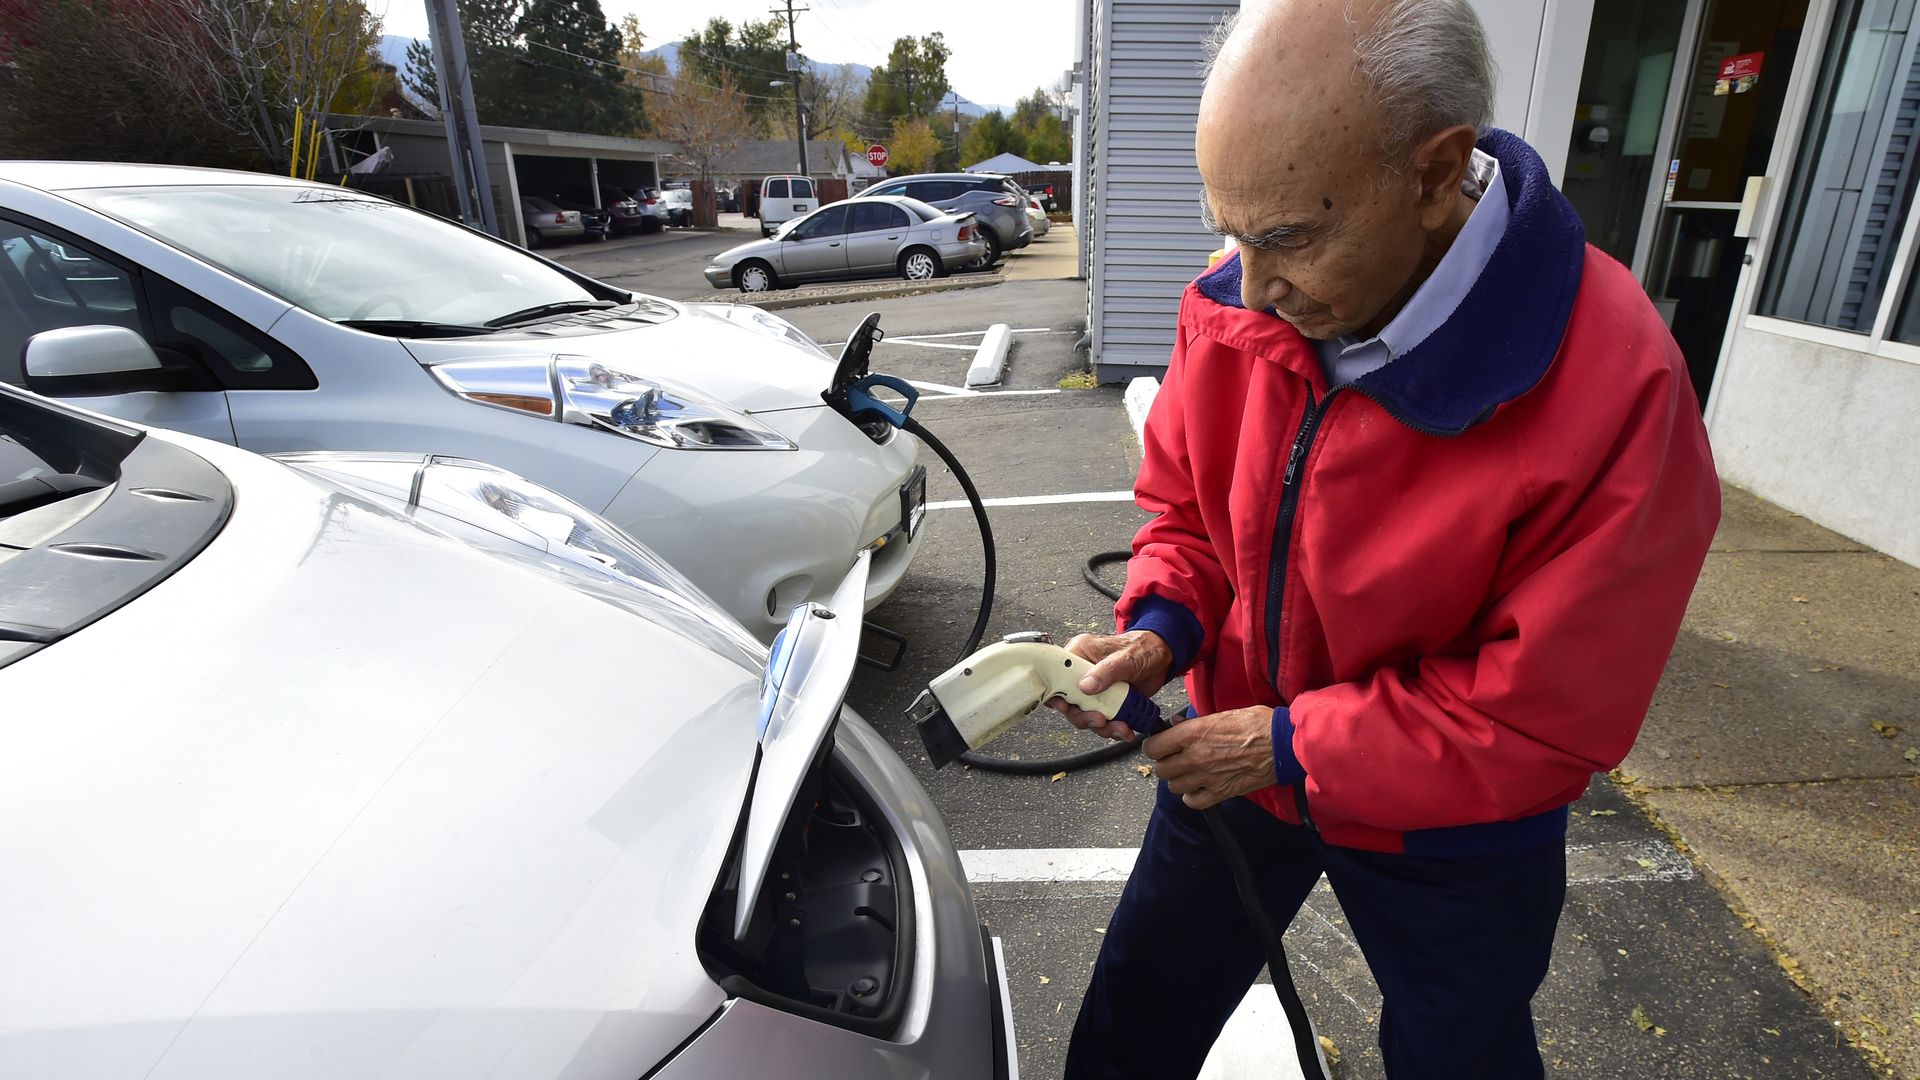 Man charging an electric car in public